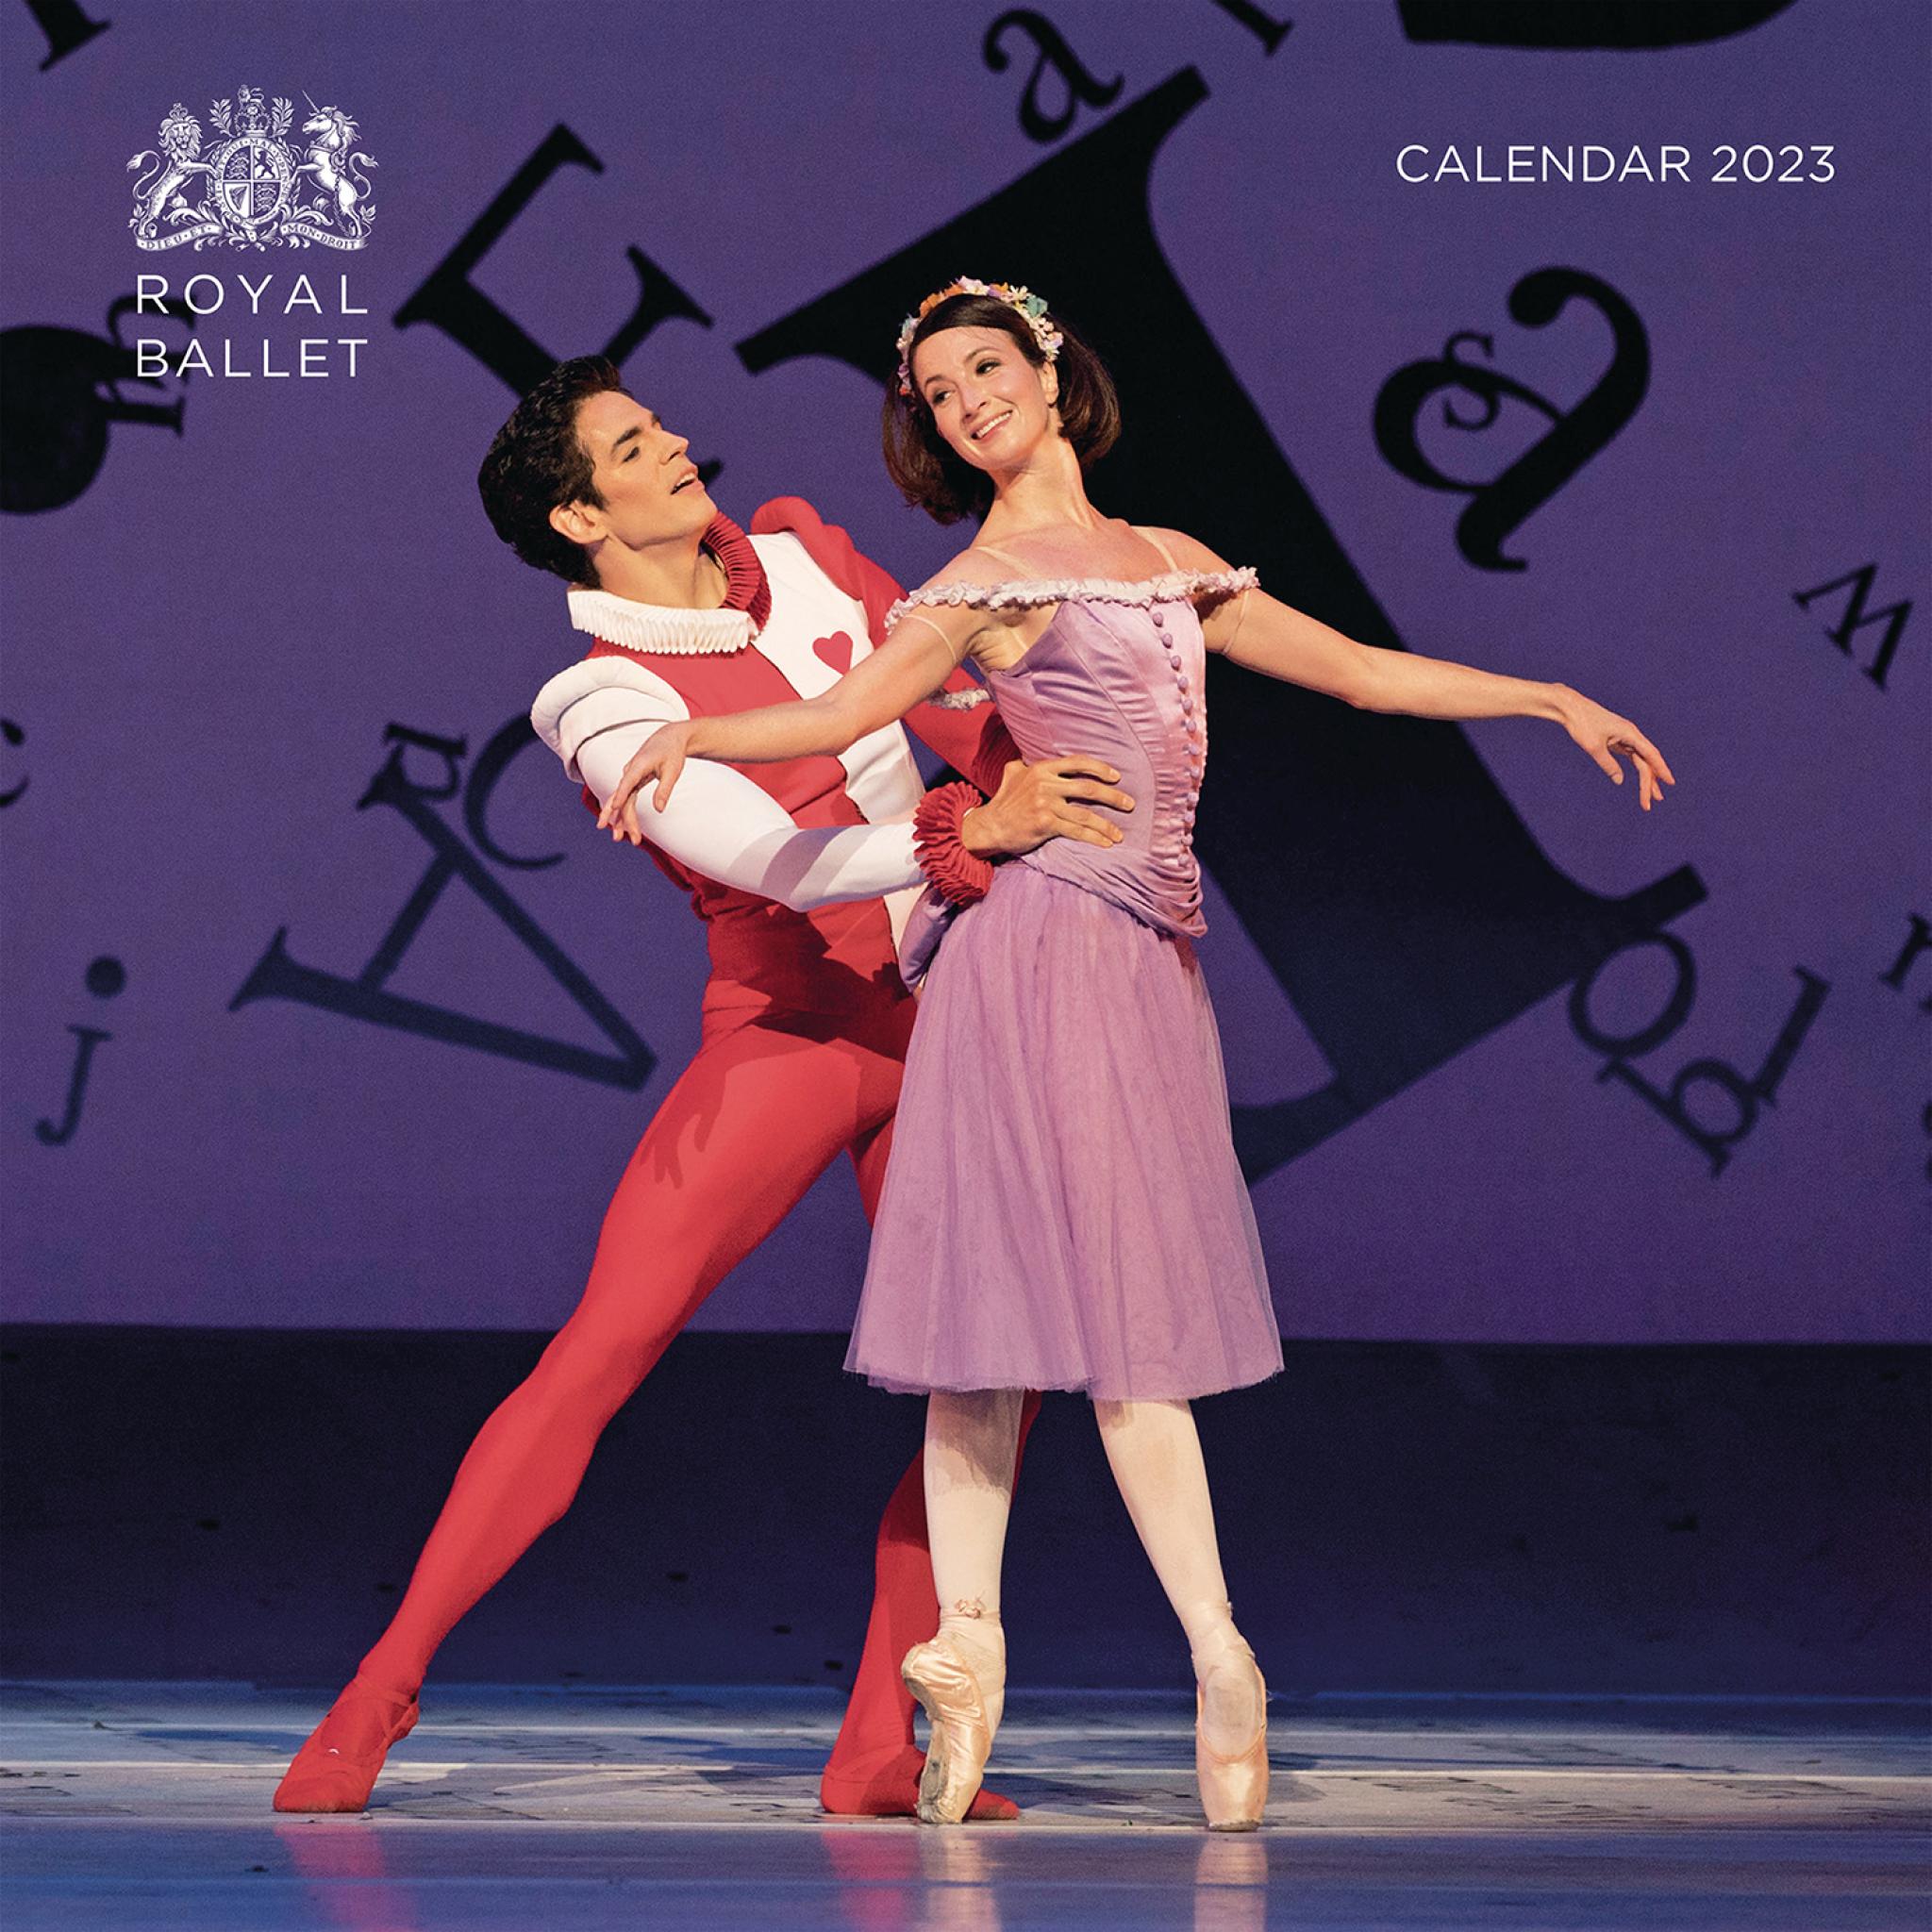 Royal Ballet Wall Calendar 2023